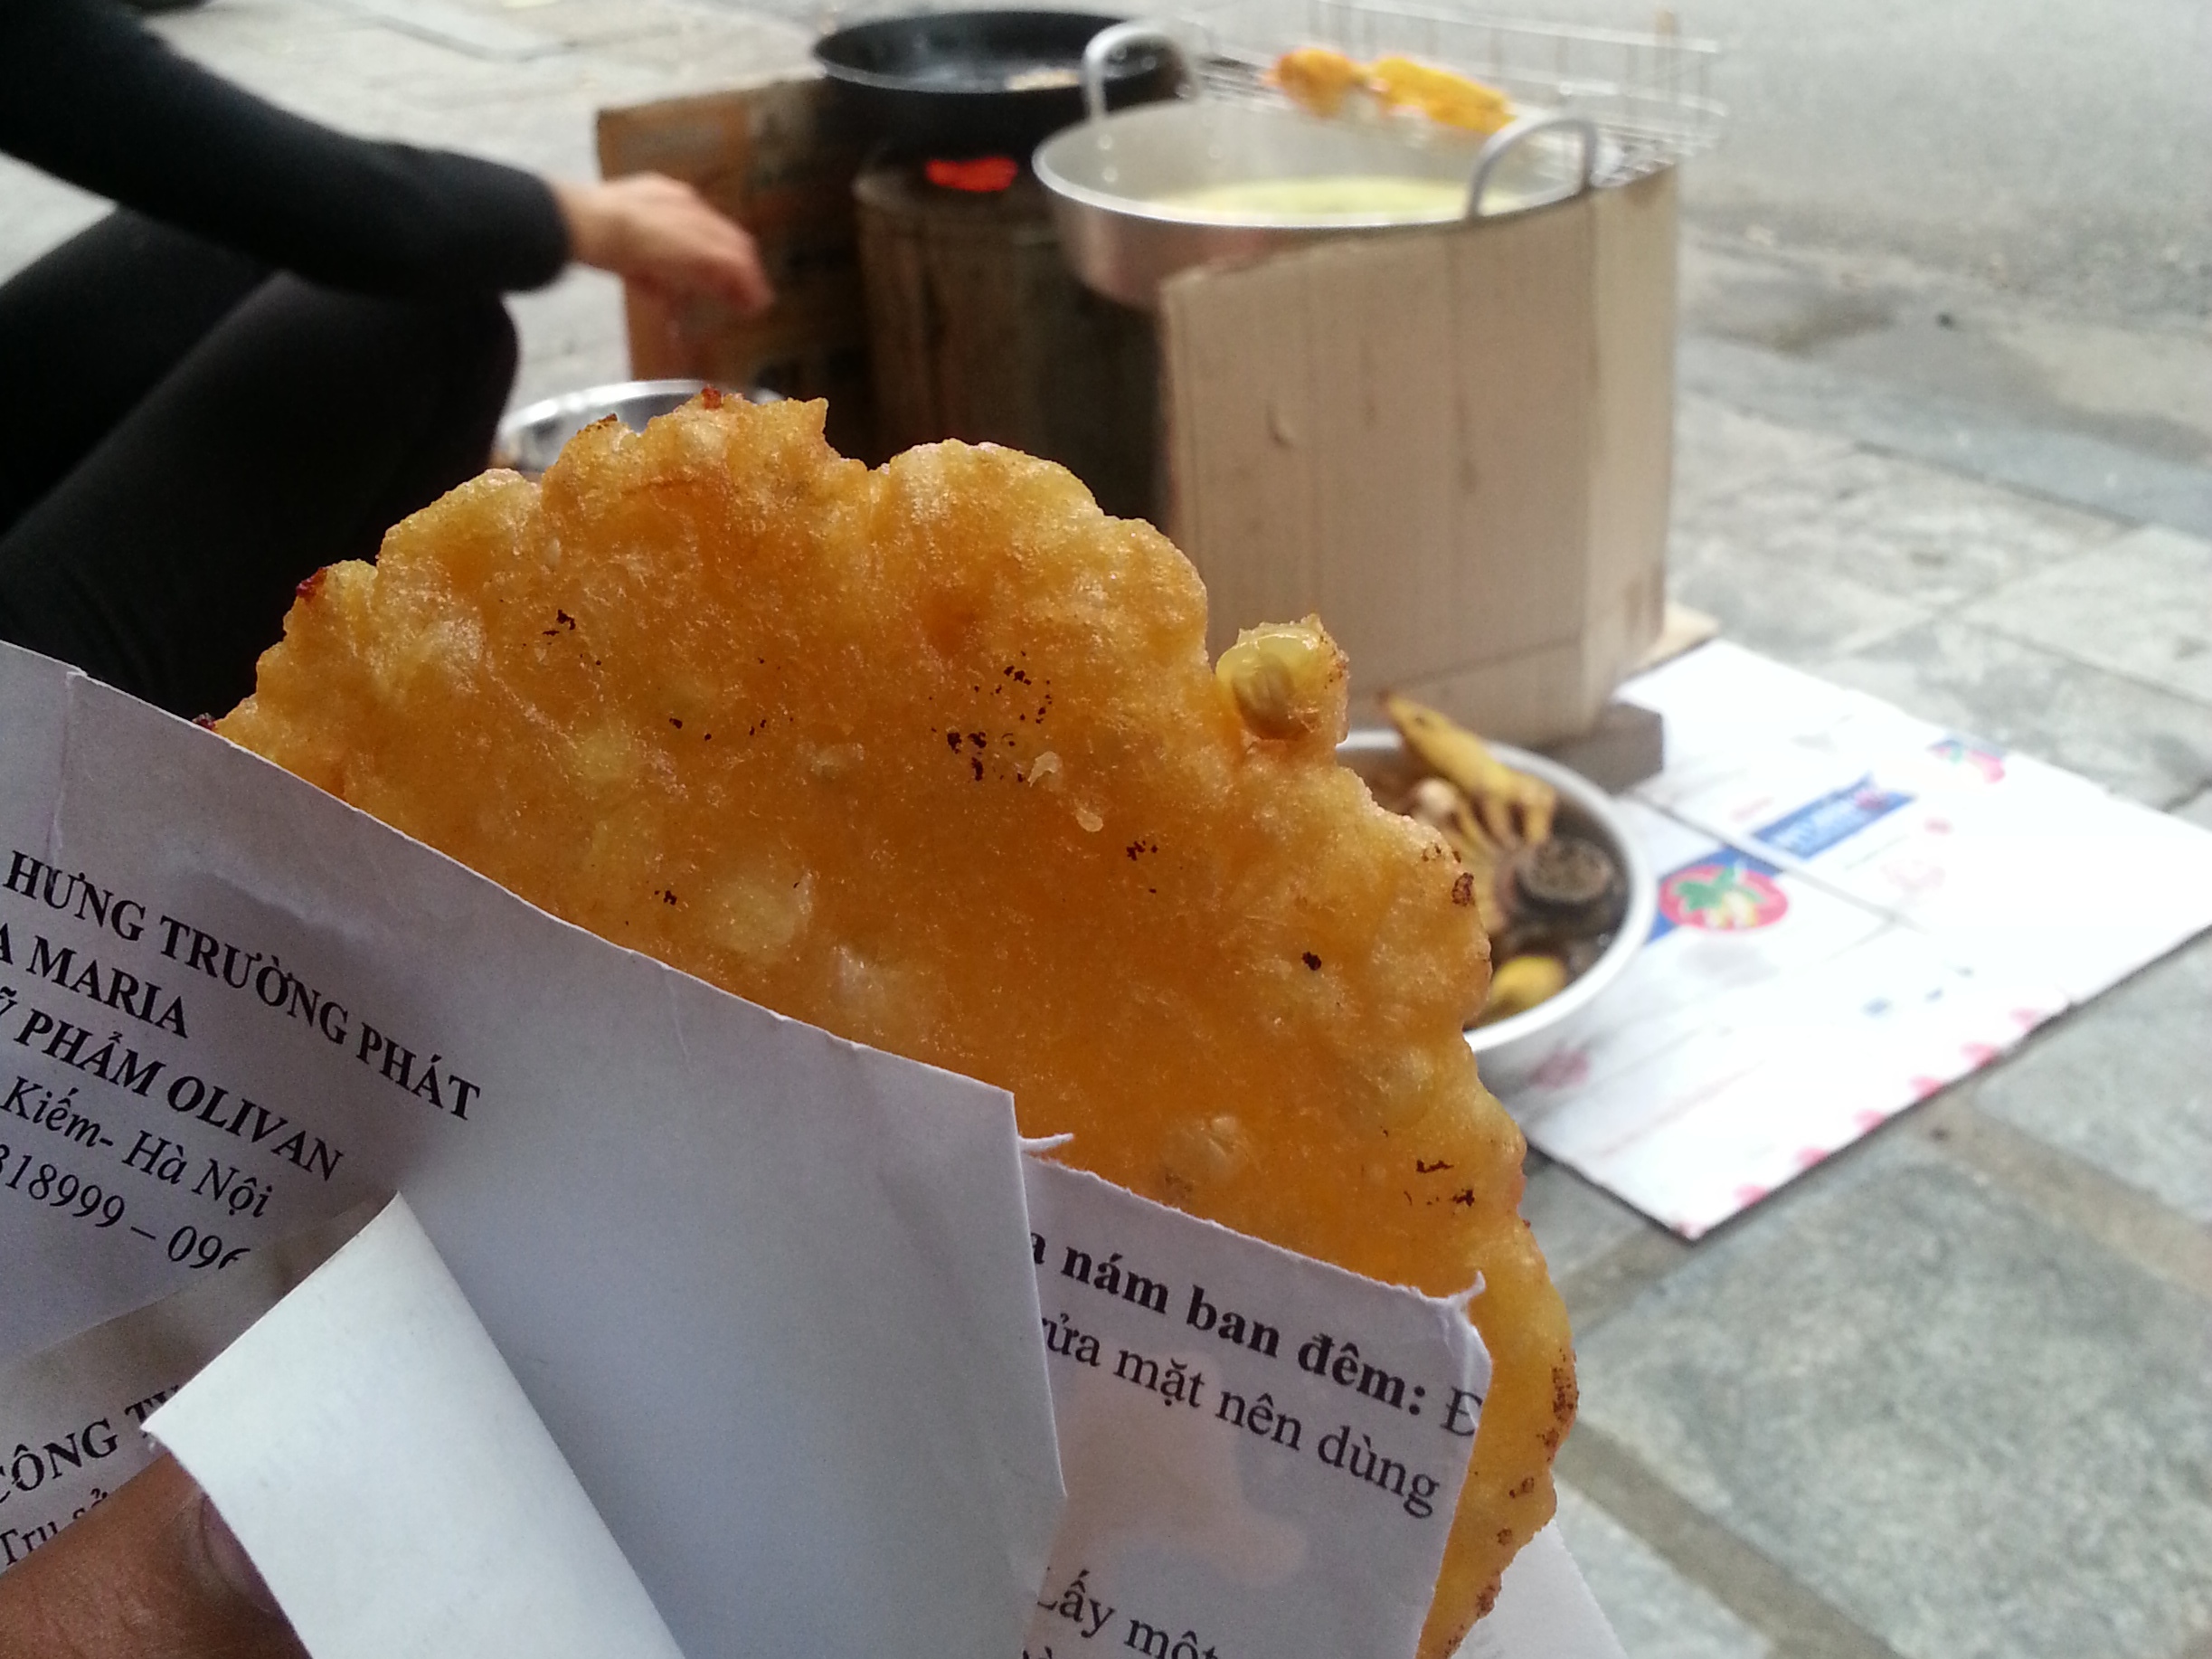 Hanoi - fried corn patty